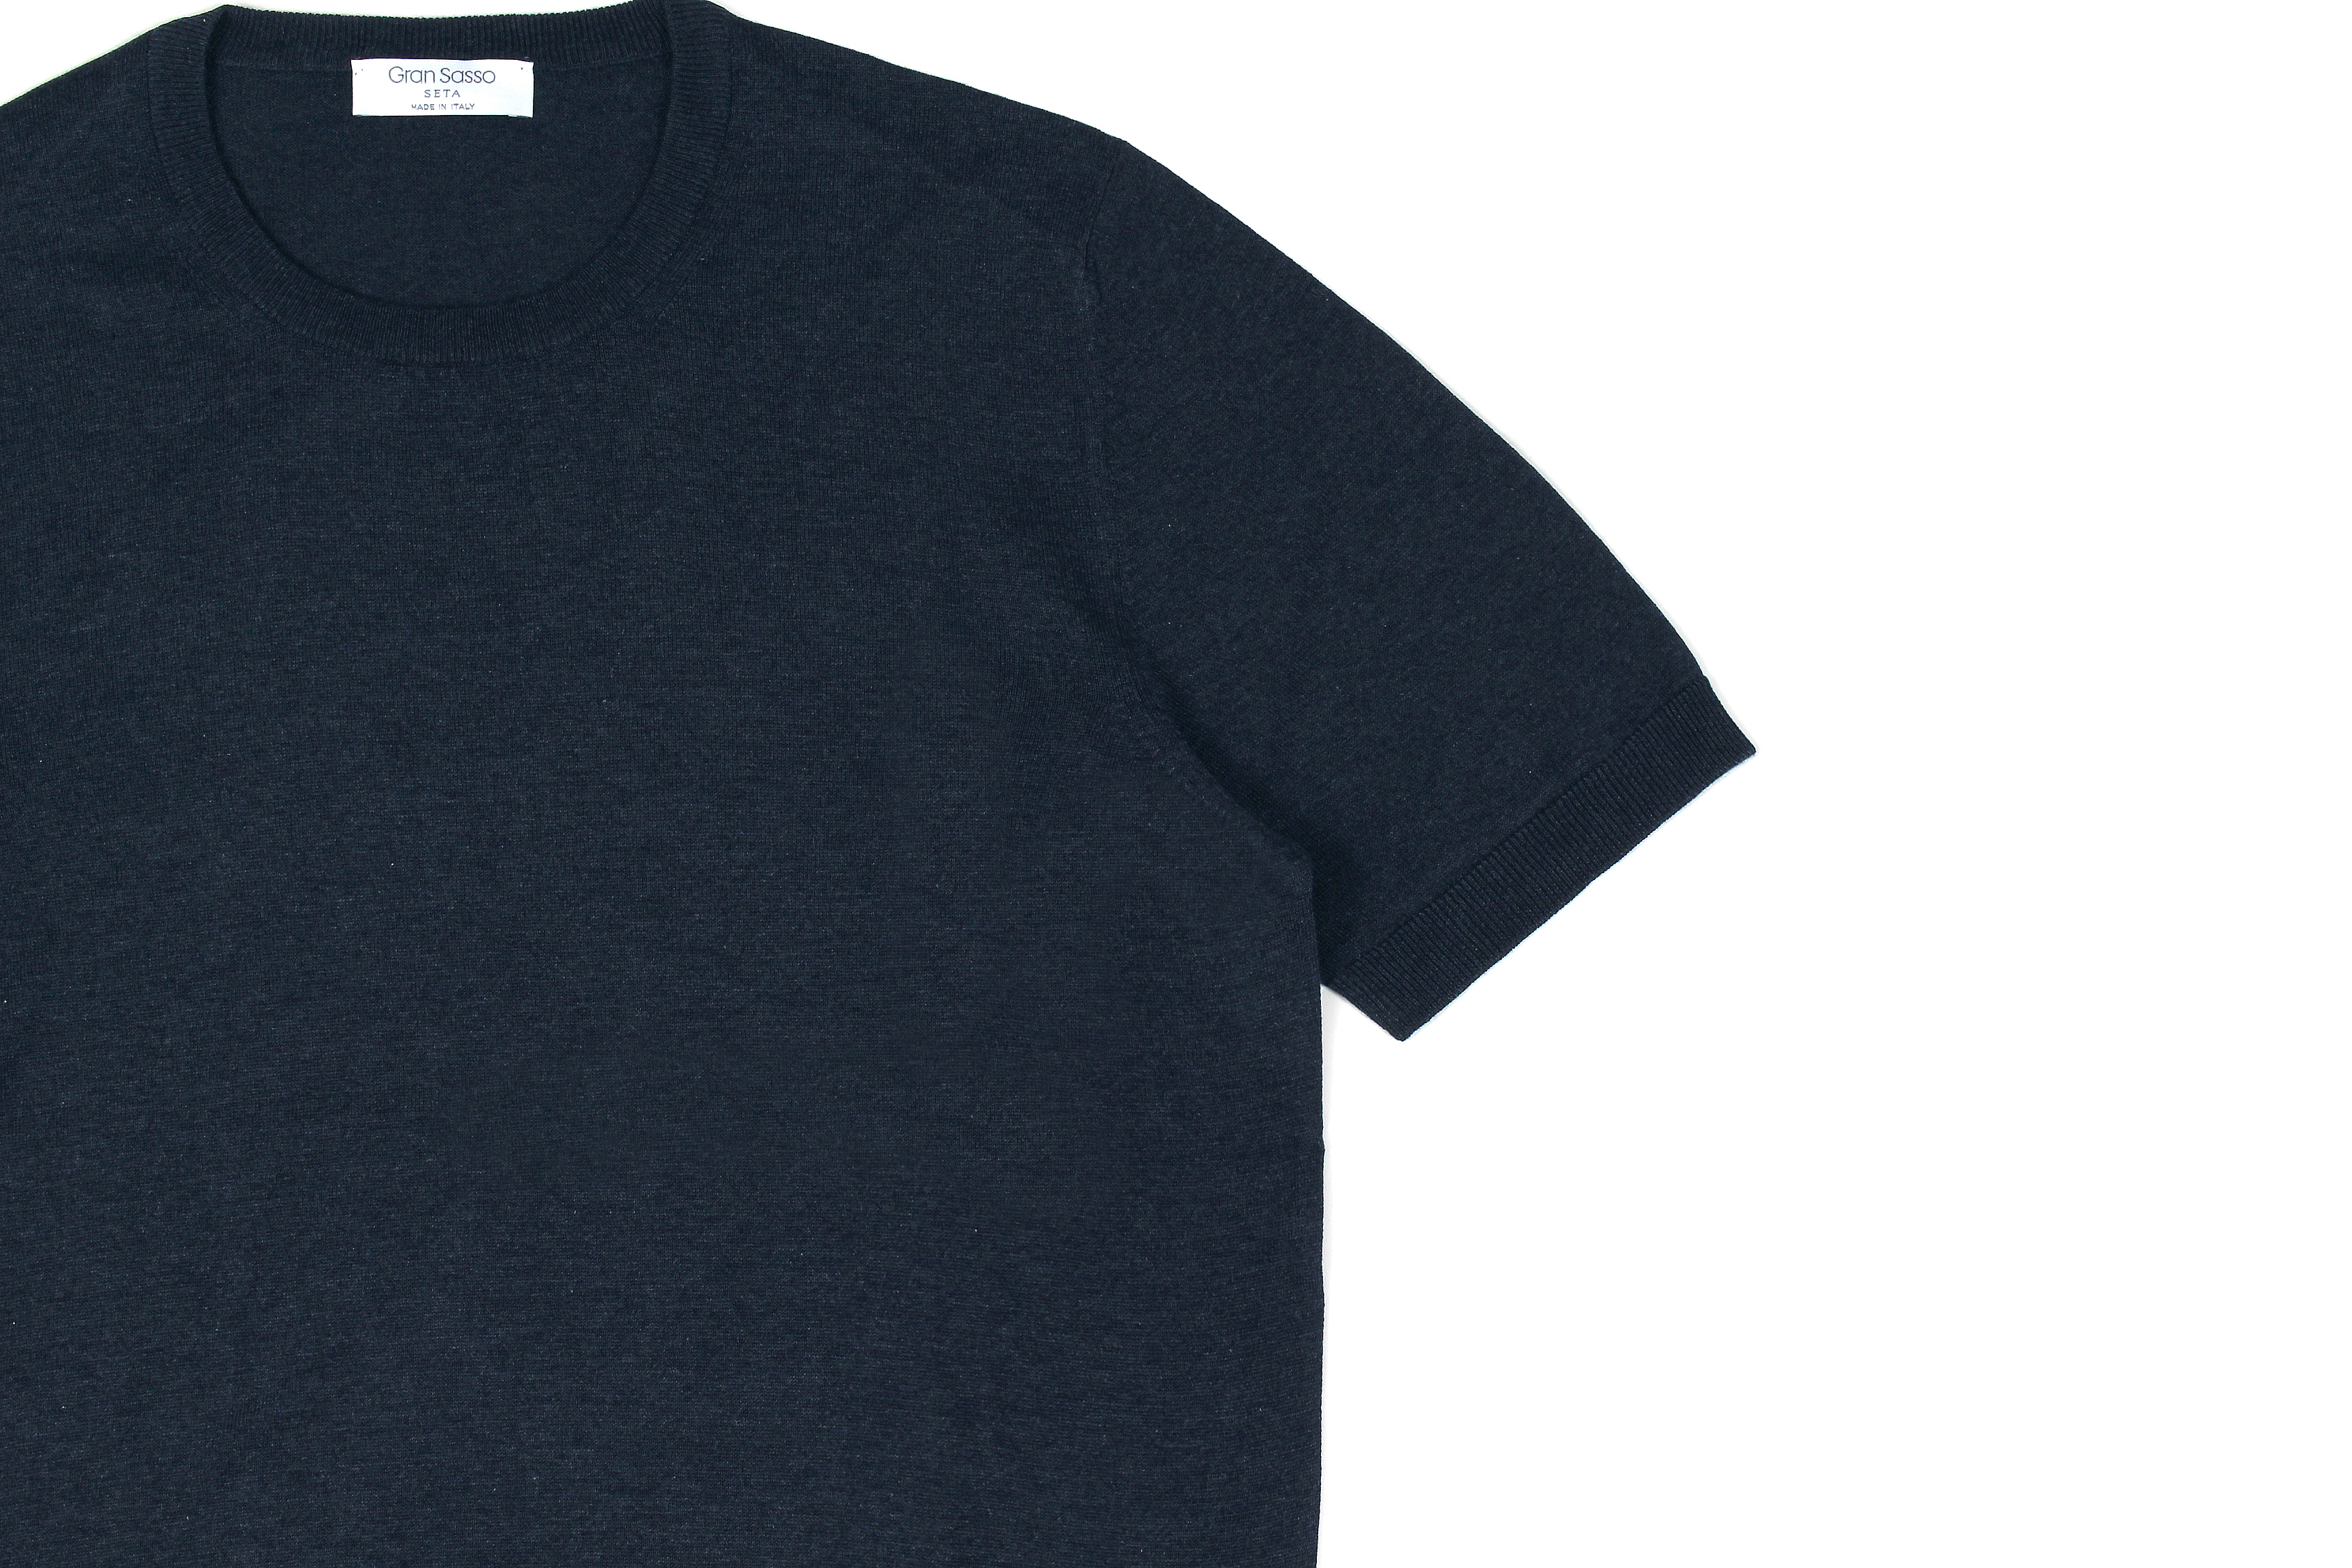 Gran Sasso (グランサッソ) Silk Knit T-shirt (シルクニット Tシャツ) SETA (シルク 100%) ショートスリーブ シルク ニット Tシャツ NAVY (ネイビー・597) made in italy (イタリア製) 2020 春夏新作 gransasso 愛知 名古屋 altoediritto アルトエデリット